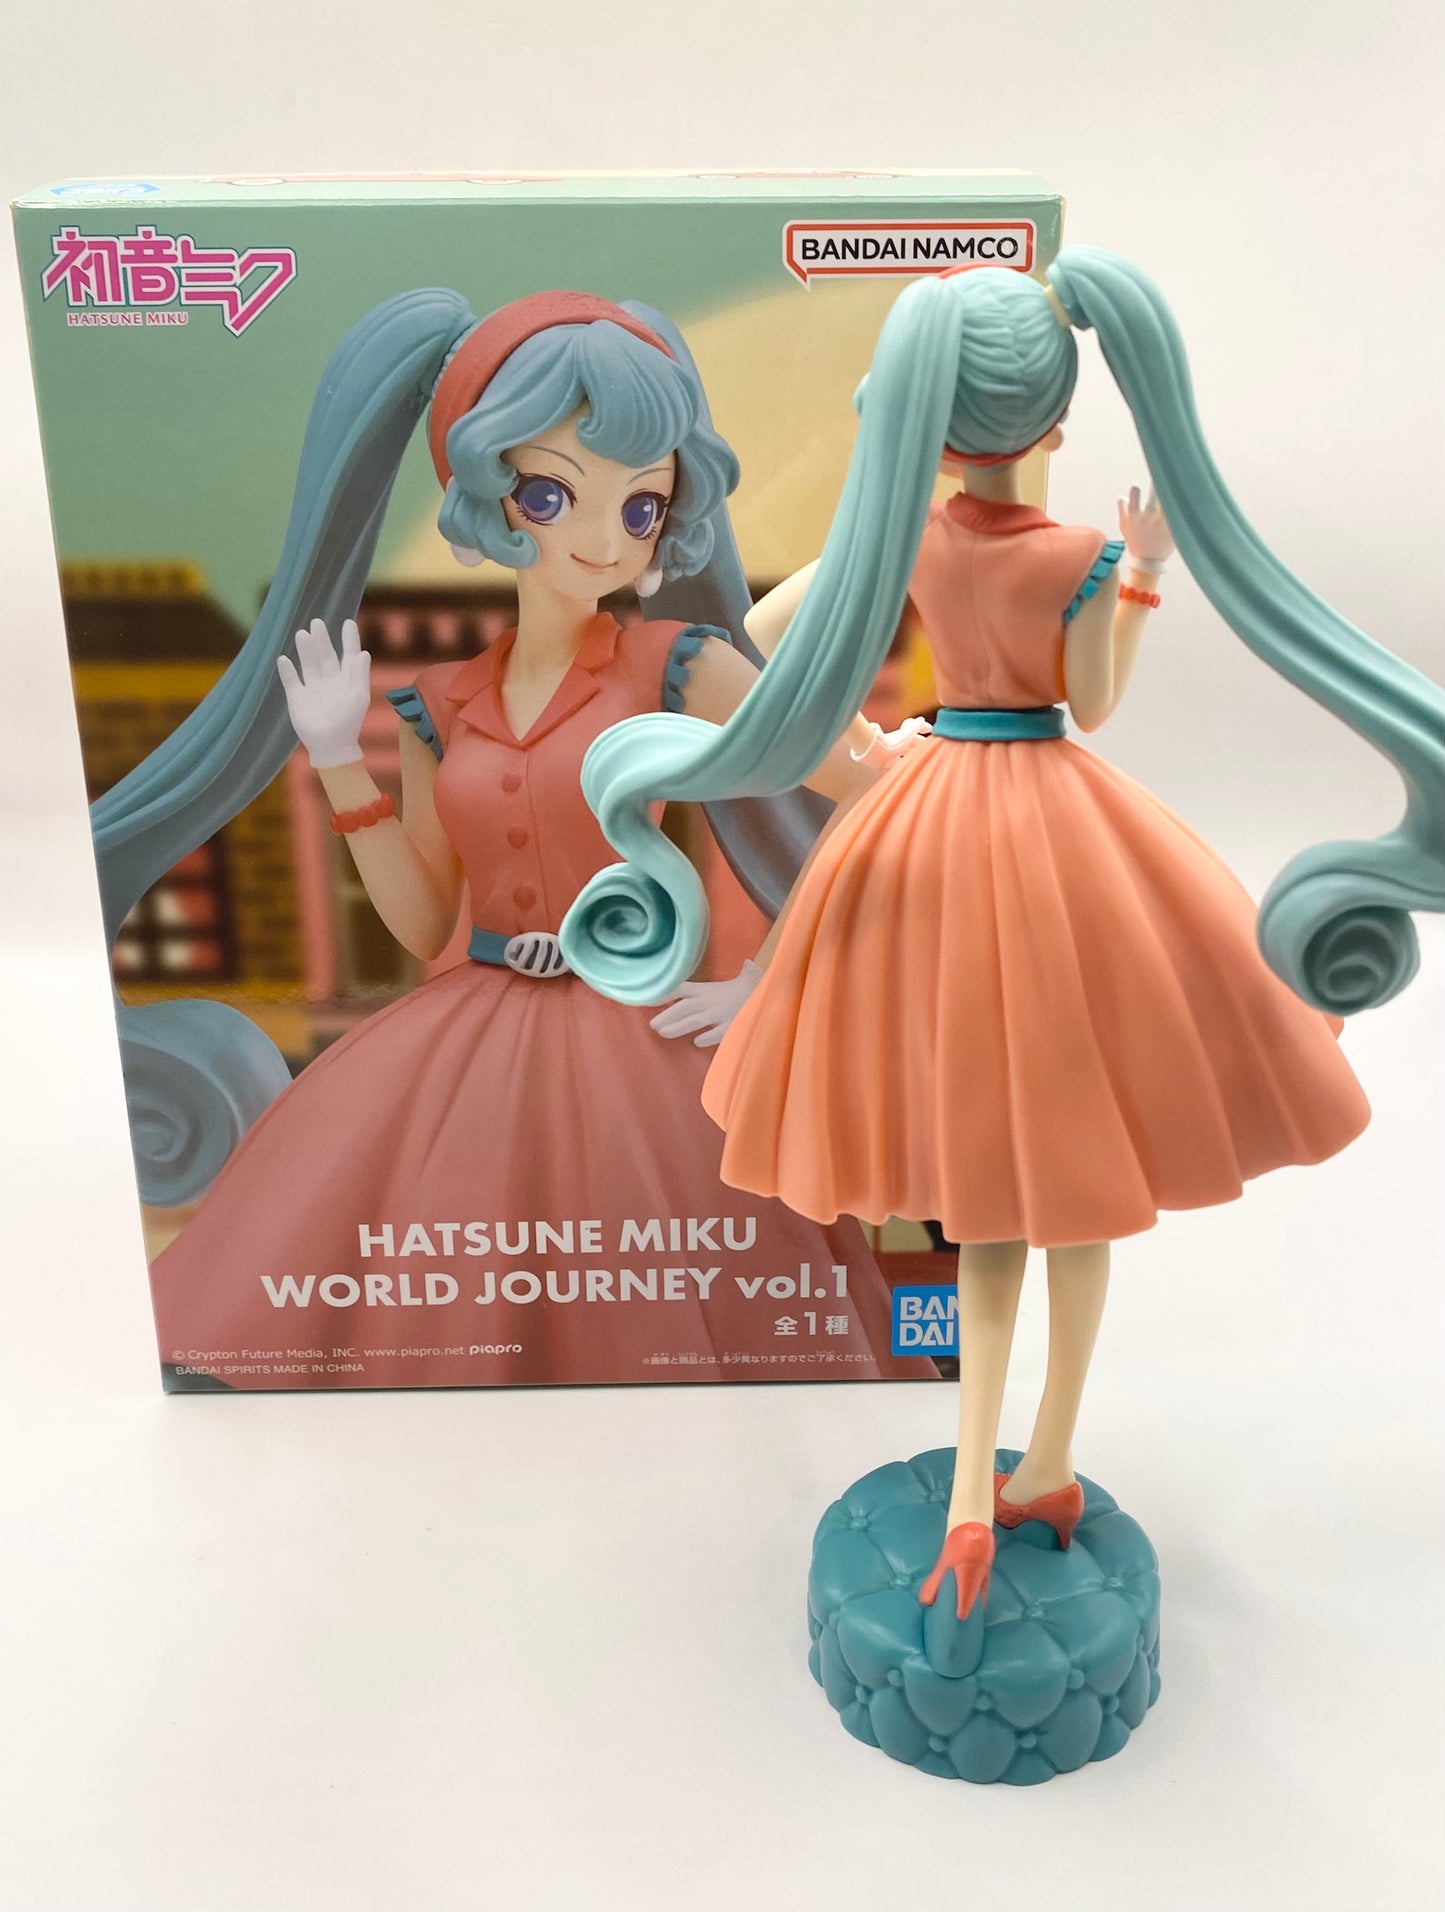 Hatsune Miku World Journey Bandai Vol 1 Figurine